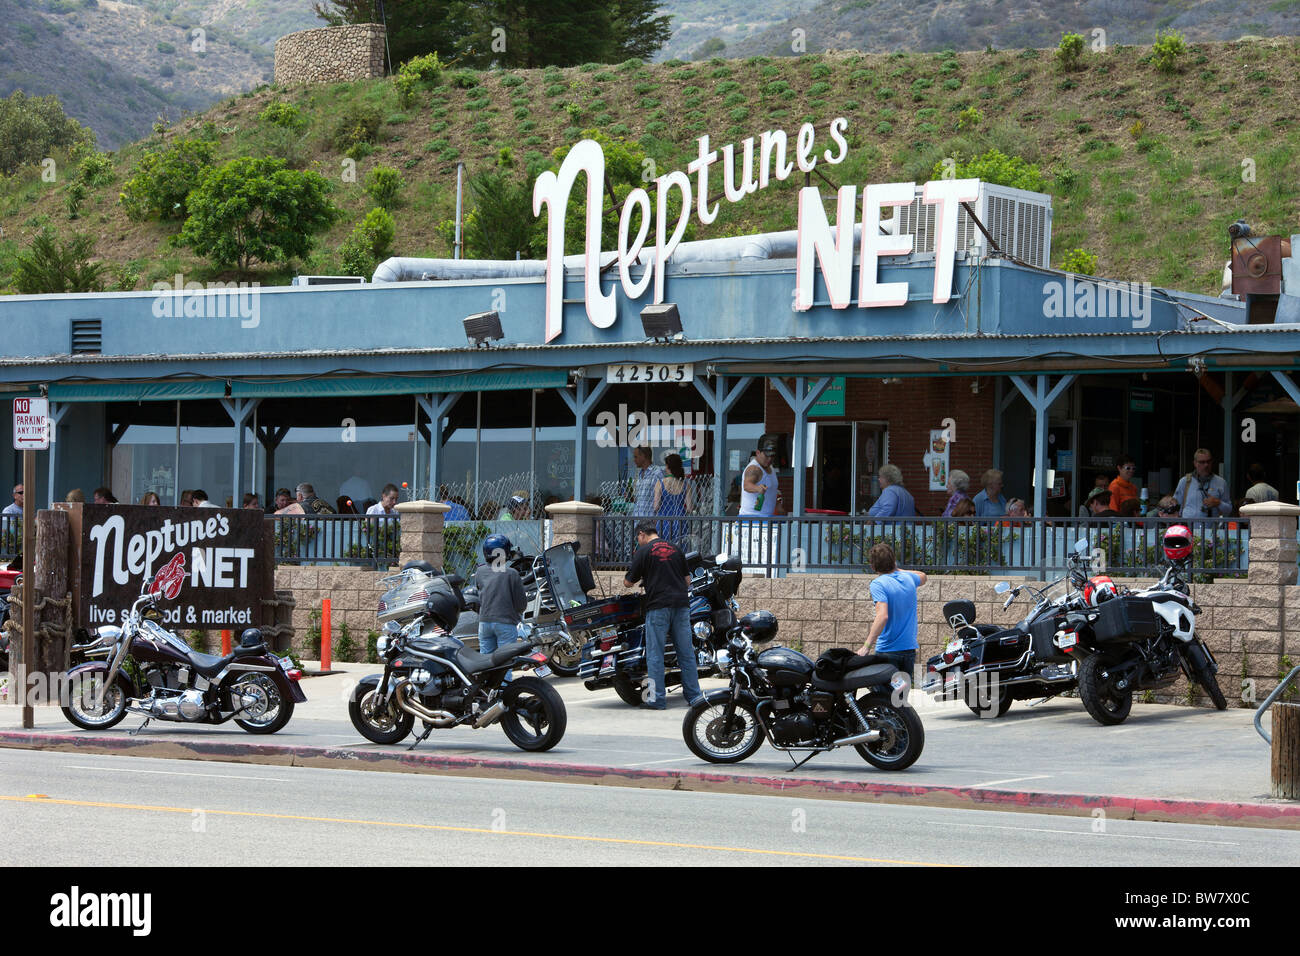 Neptune Net clam shack restaurant established in 1958 on the Pacific Coast Highway near Malibu Stock Photo